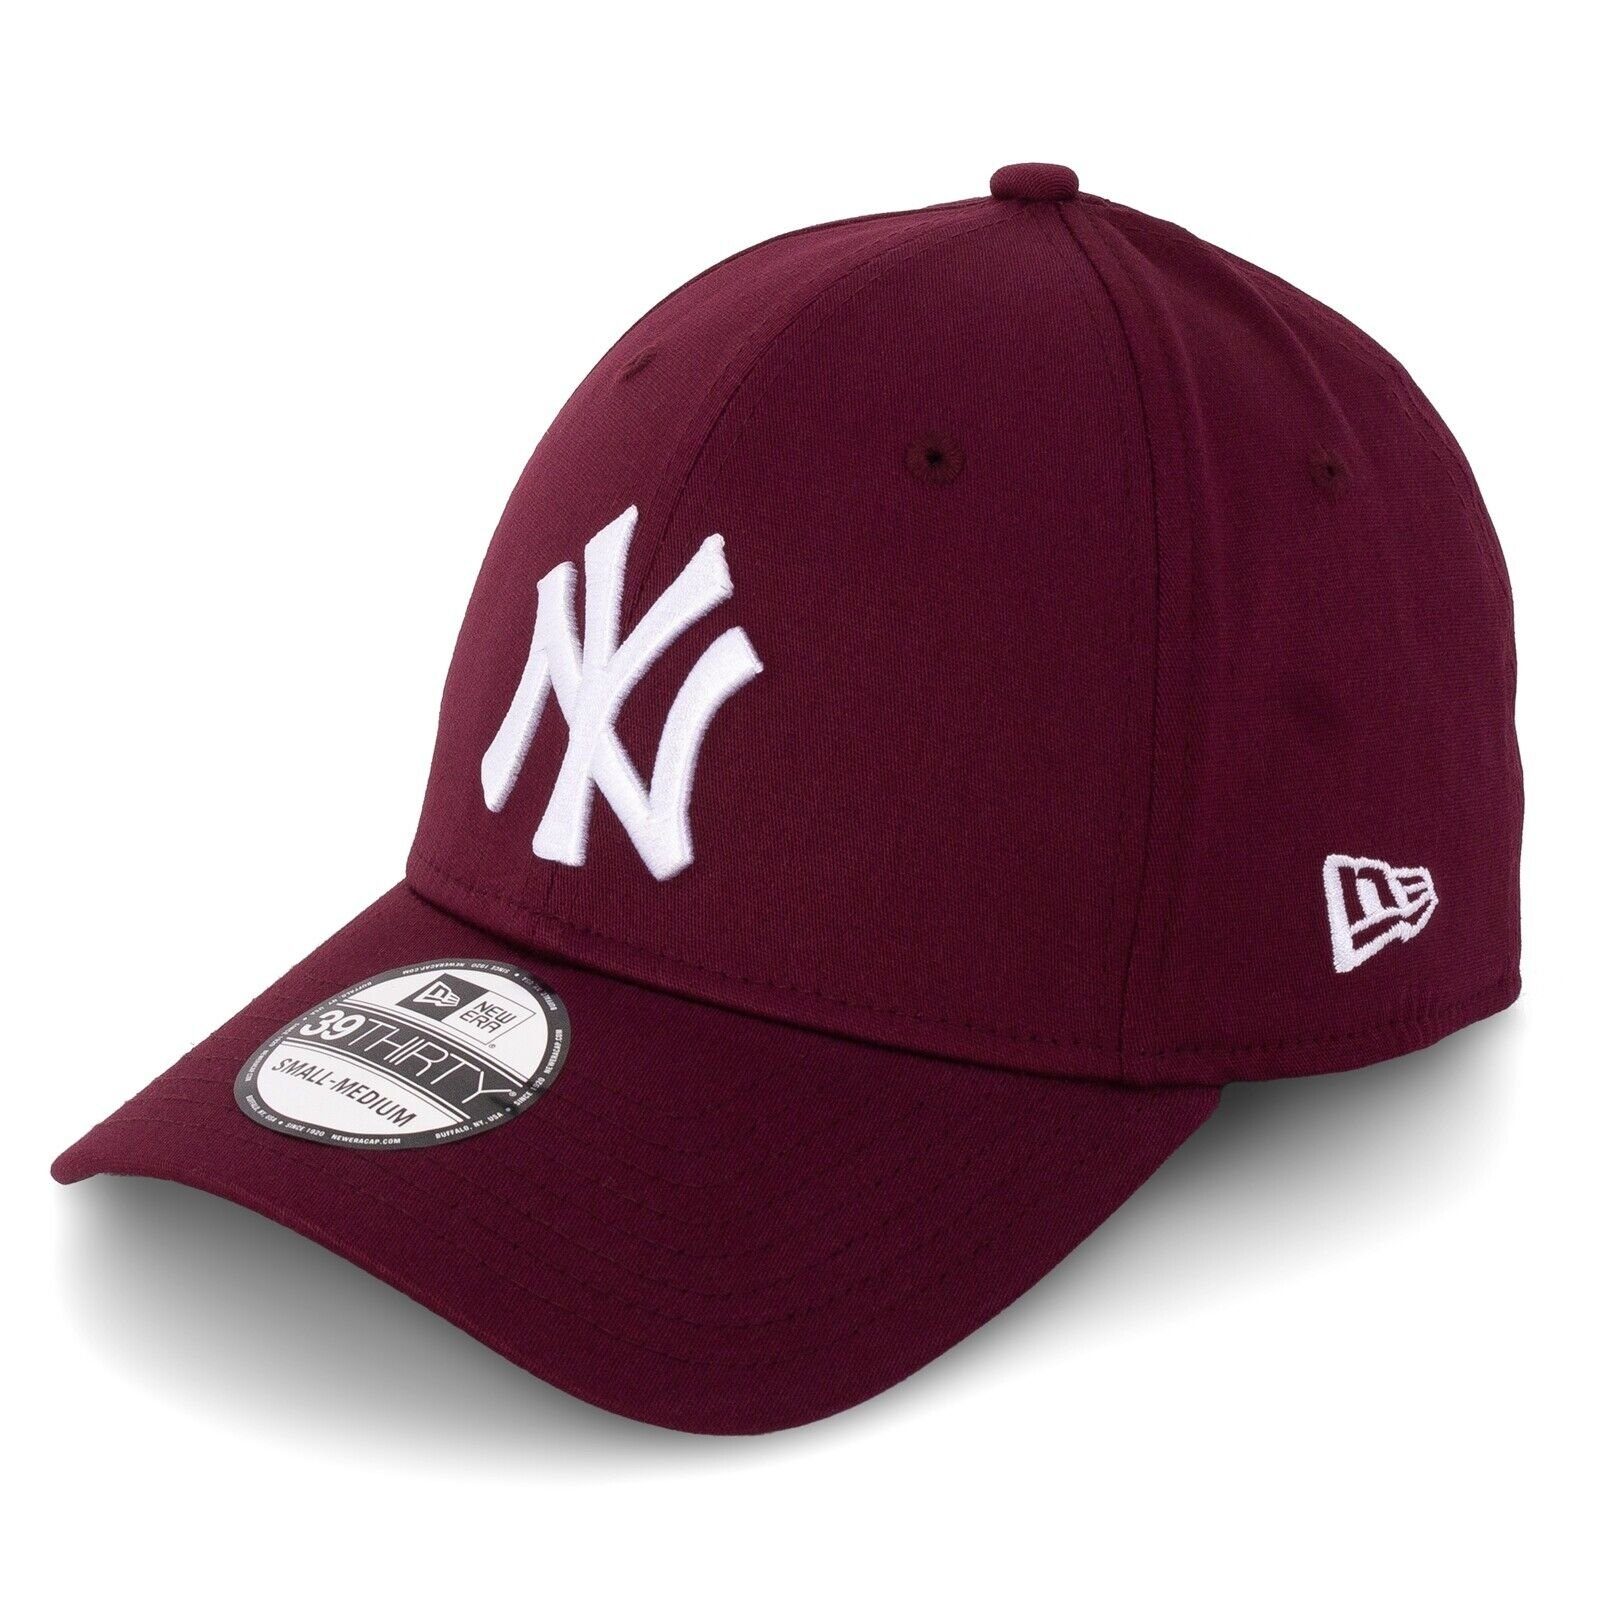 New Cap New Baseball Cap New York Era Era Yankees (1-St) 39Thirty